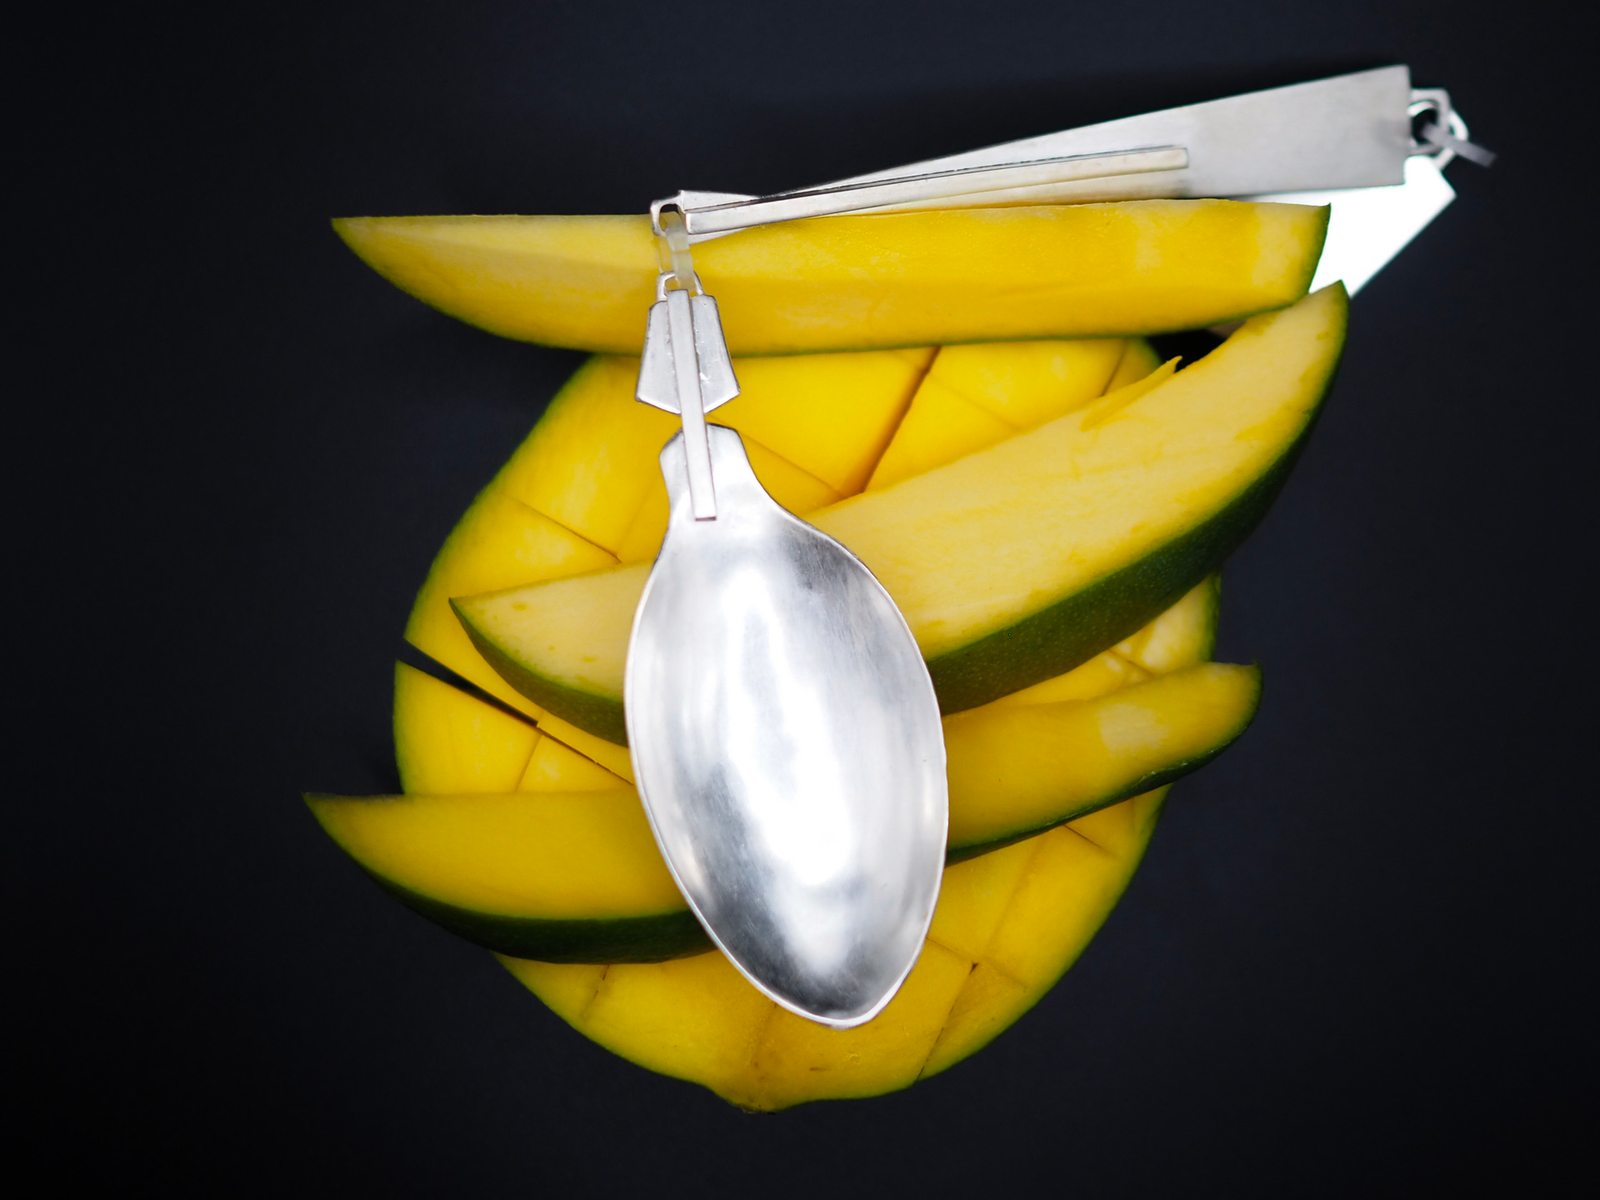 Spoon broken into three parts, sitting on a cut up mango 